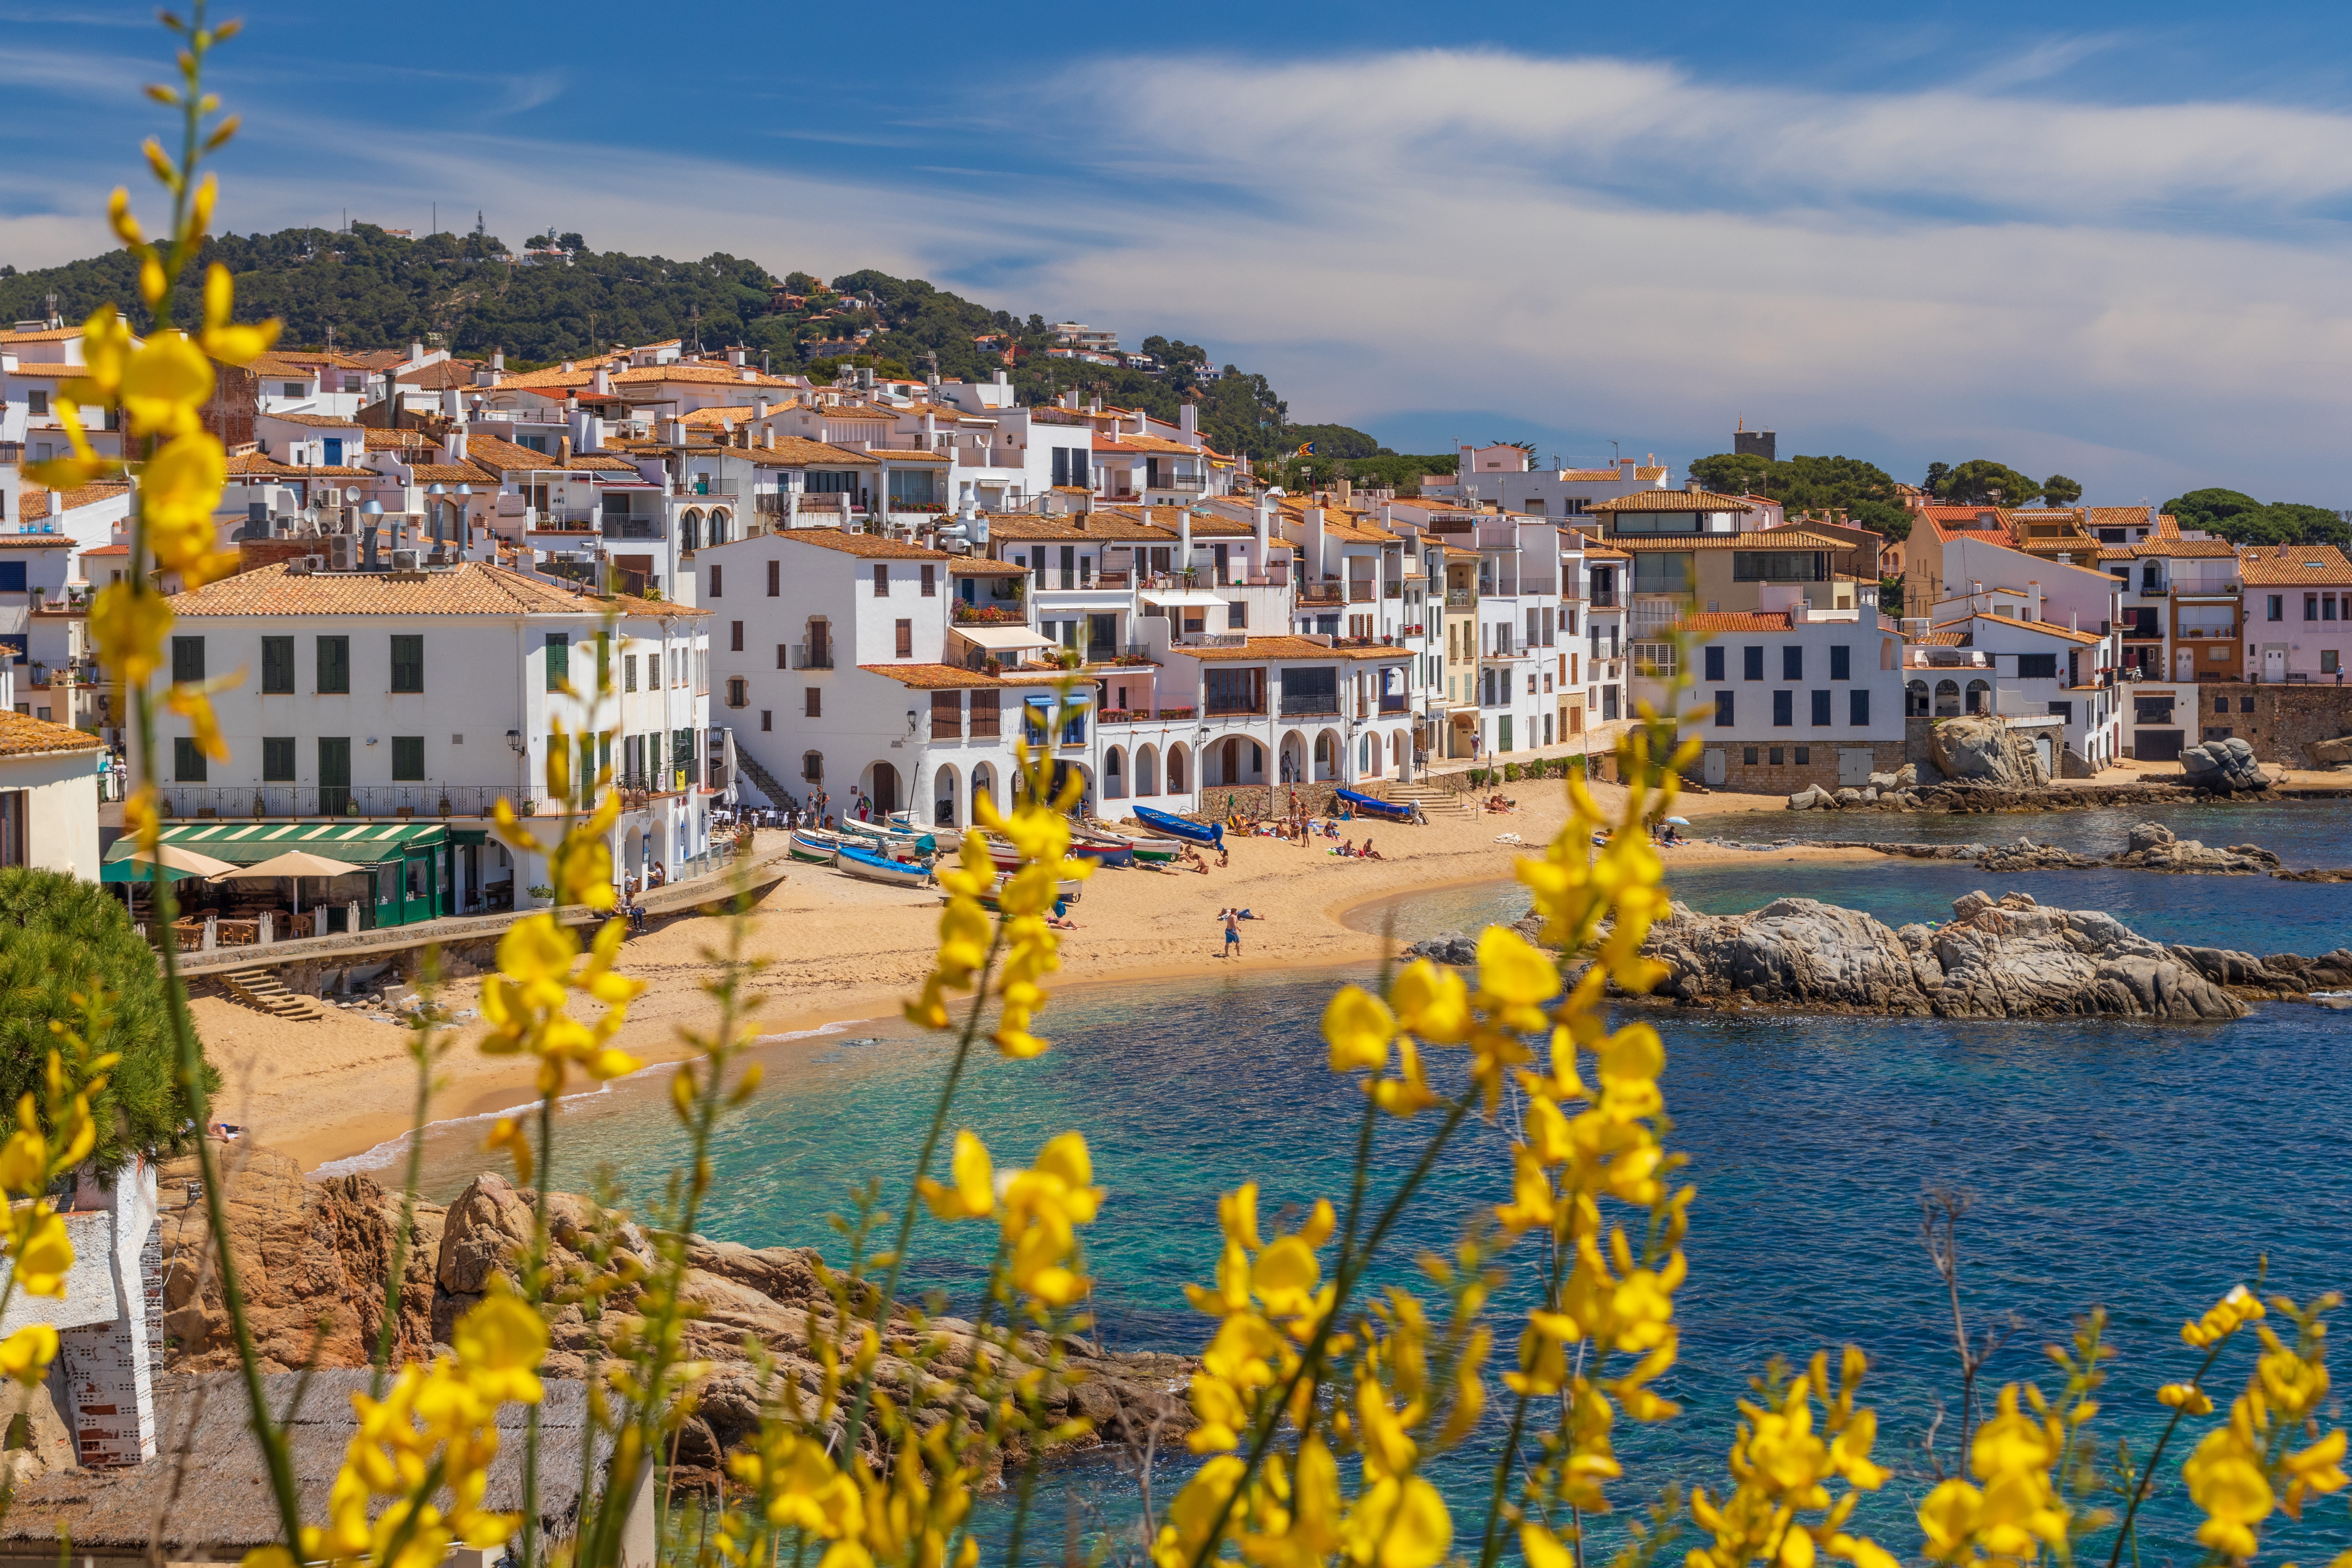 Costa Del Sol: A Rising Star In Spain's Real Estate Market